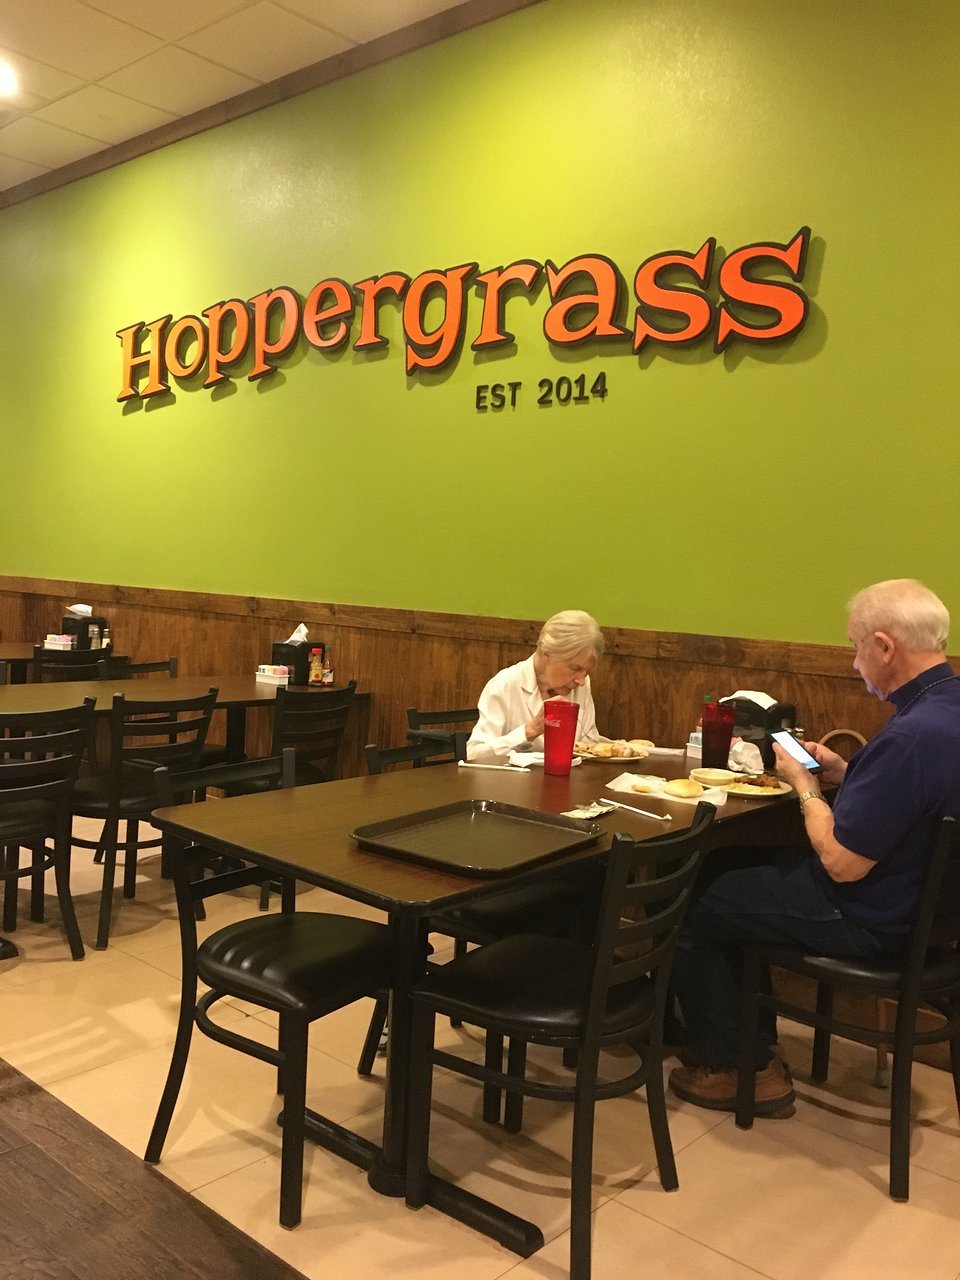 Hoppergrass Restaurant